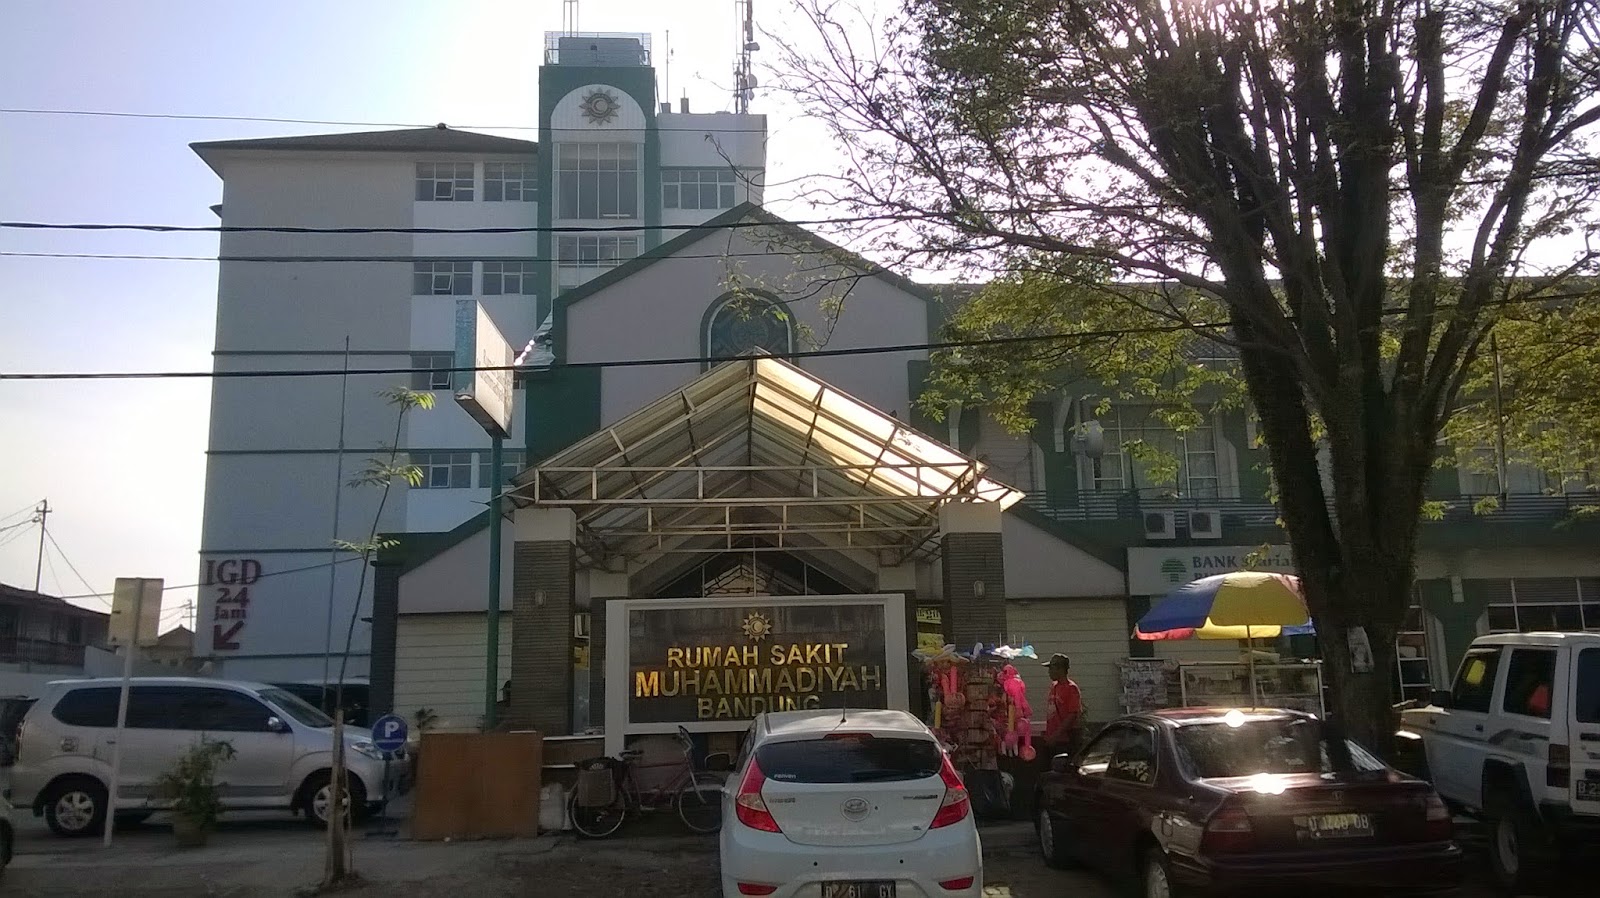 Rumah Sakit Muhammadiyah, Bandung